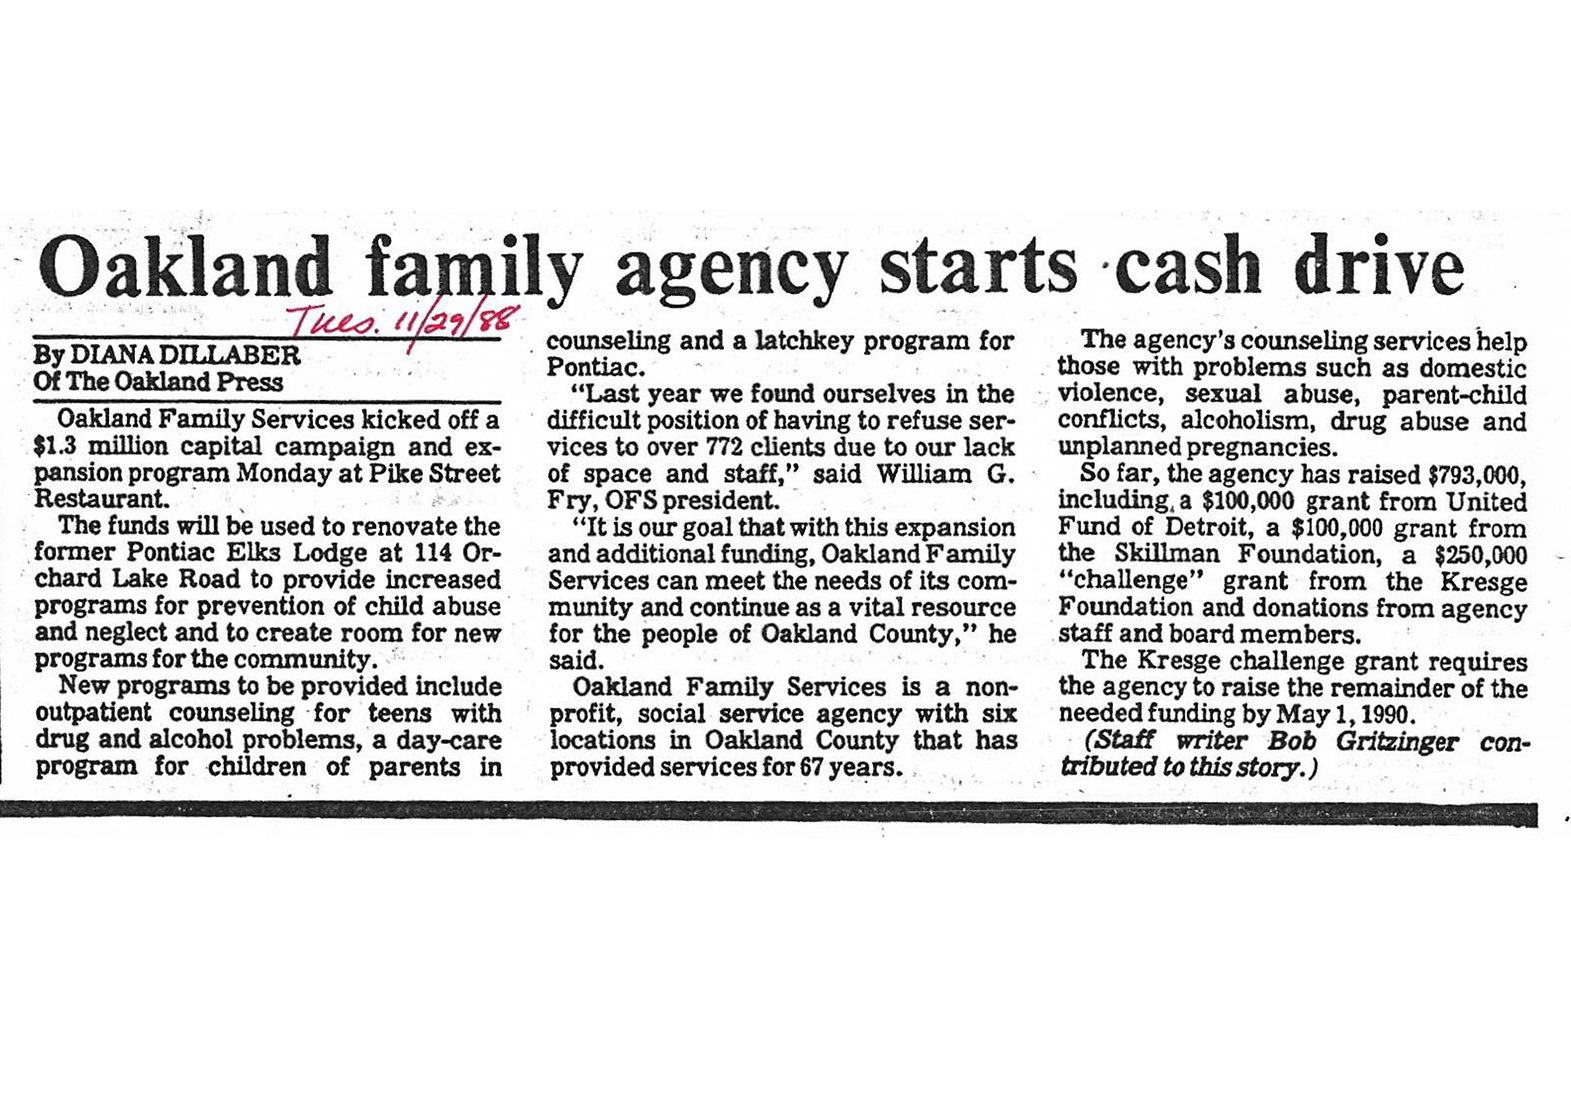  The Oakland Press, Nov. 29, 1988 